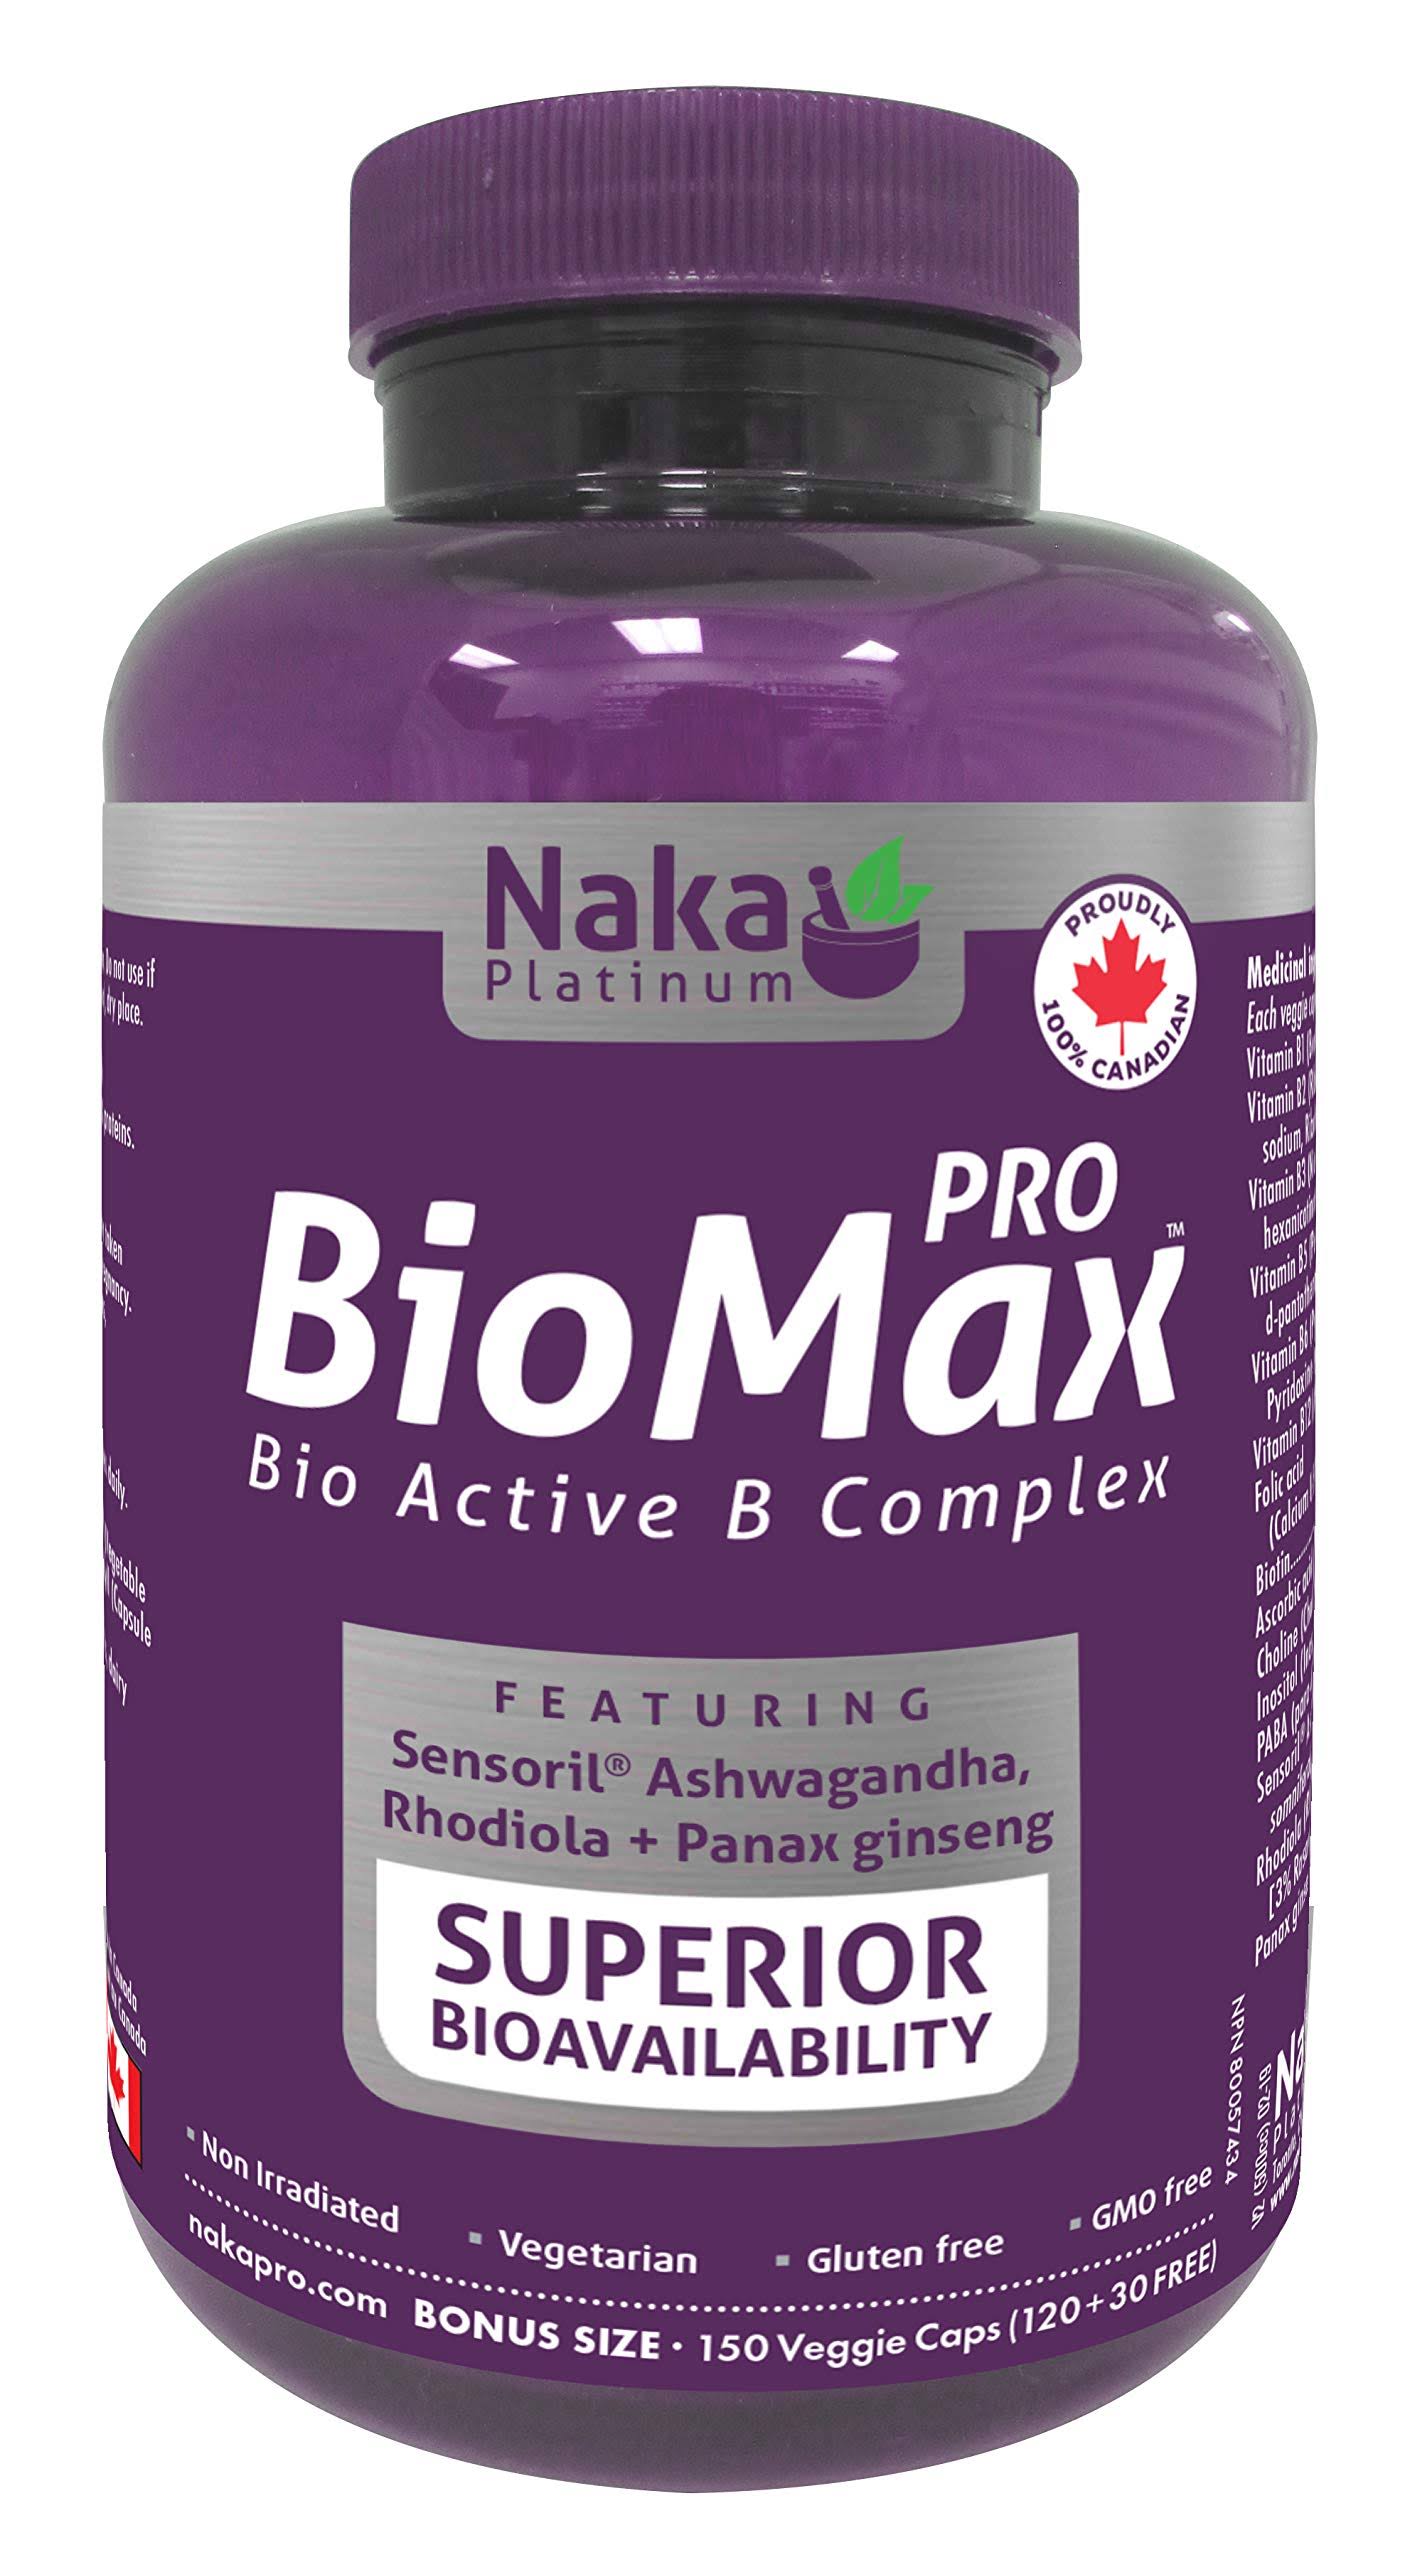 Naka Platinum Pro Biomax Bio Active B Complex 150 Veggie Caps